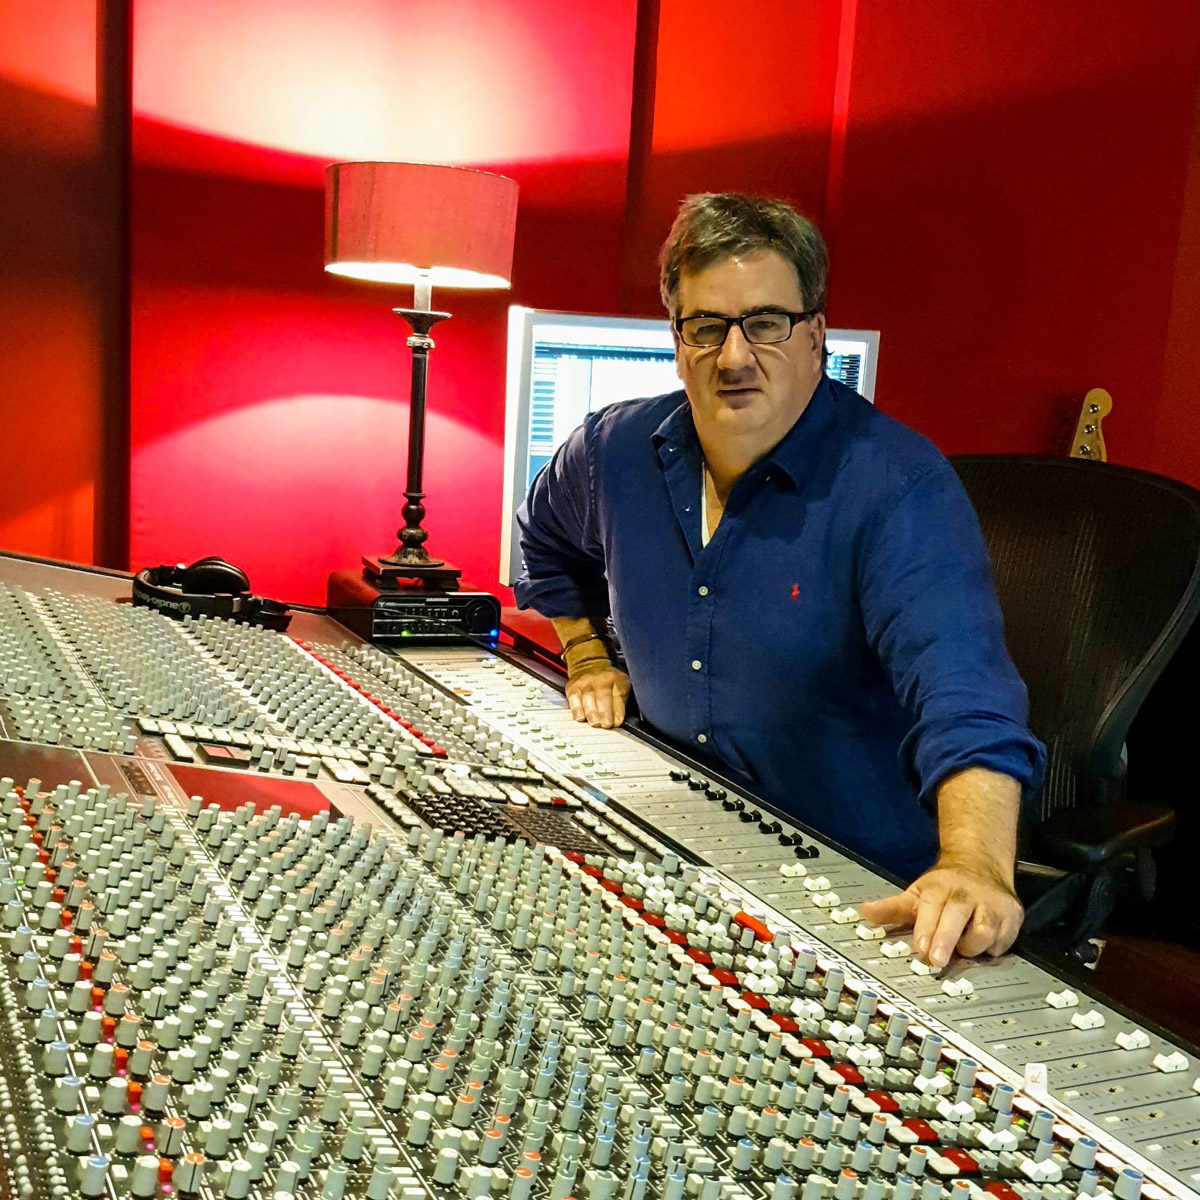 Recording Studio Producer Andrew Cochrane